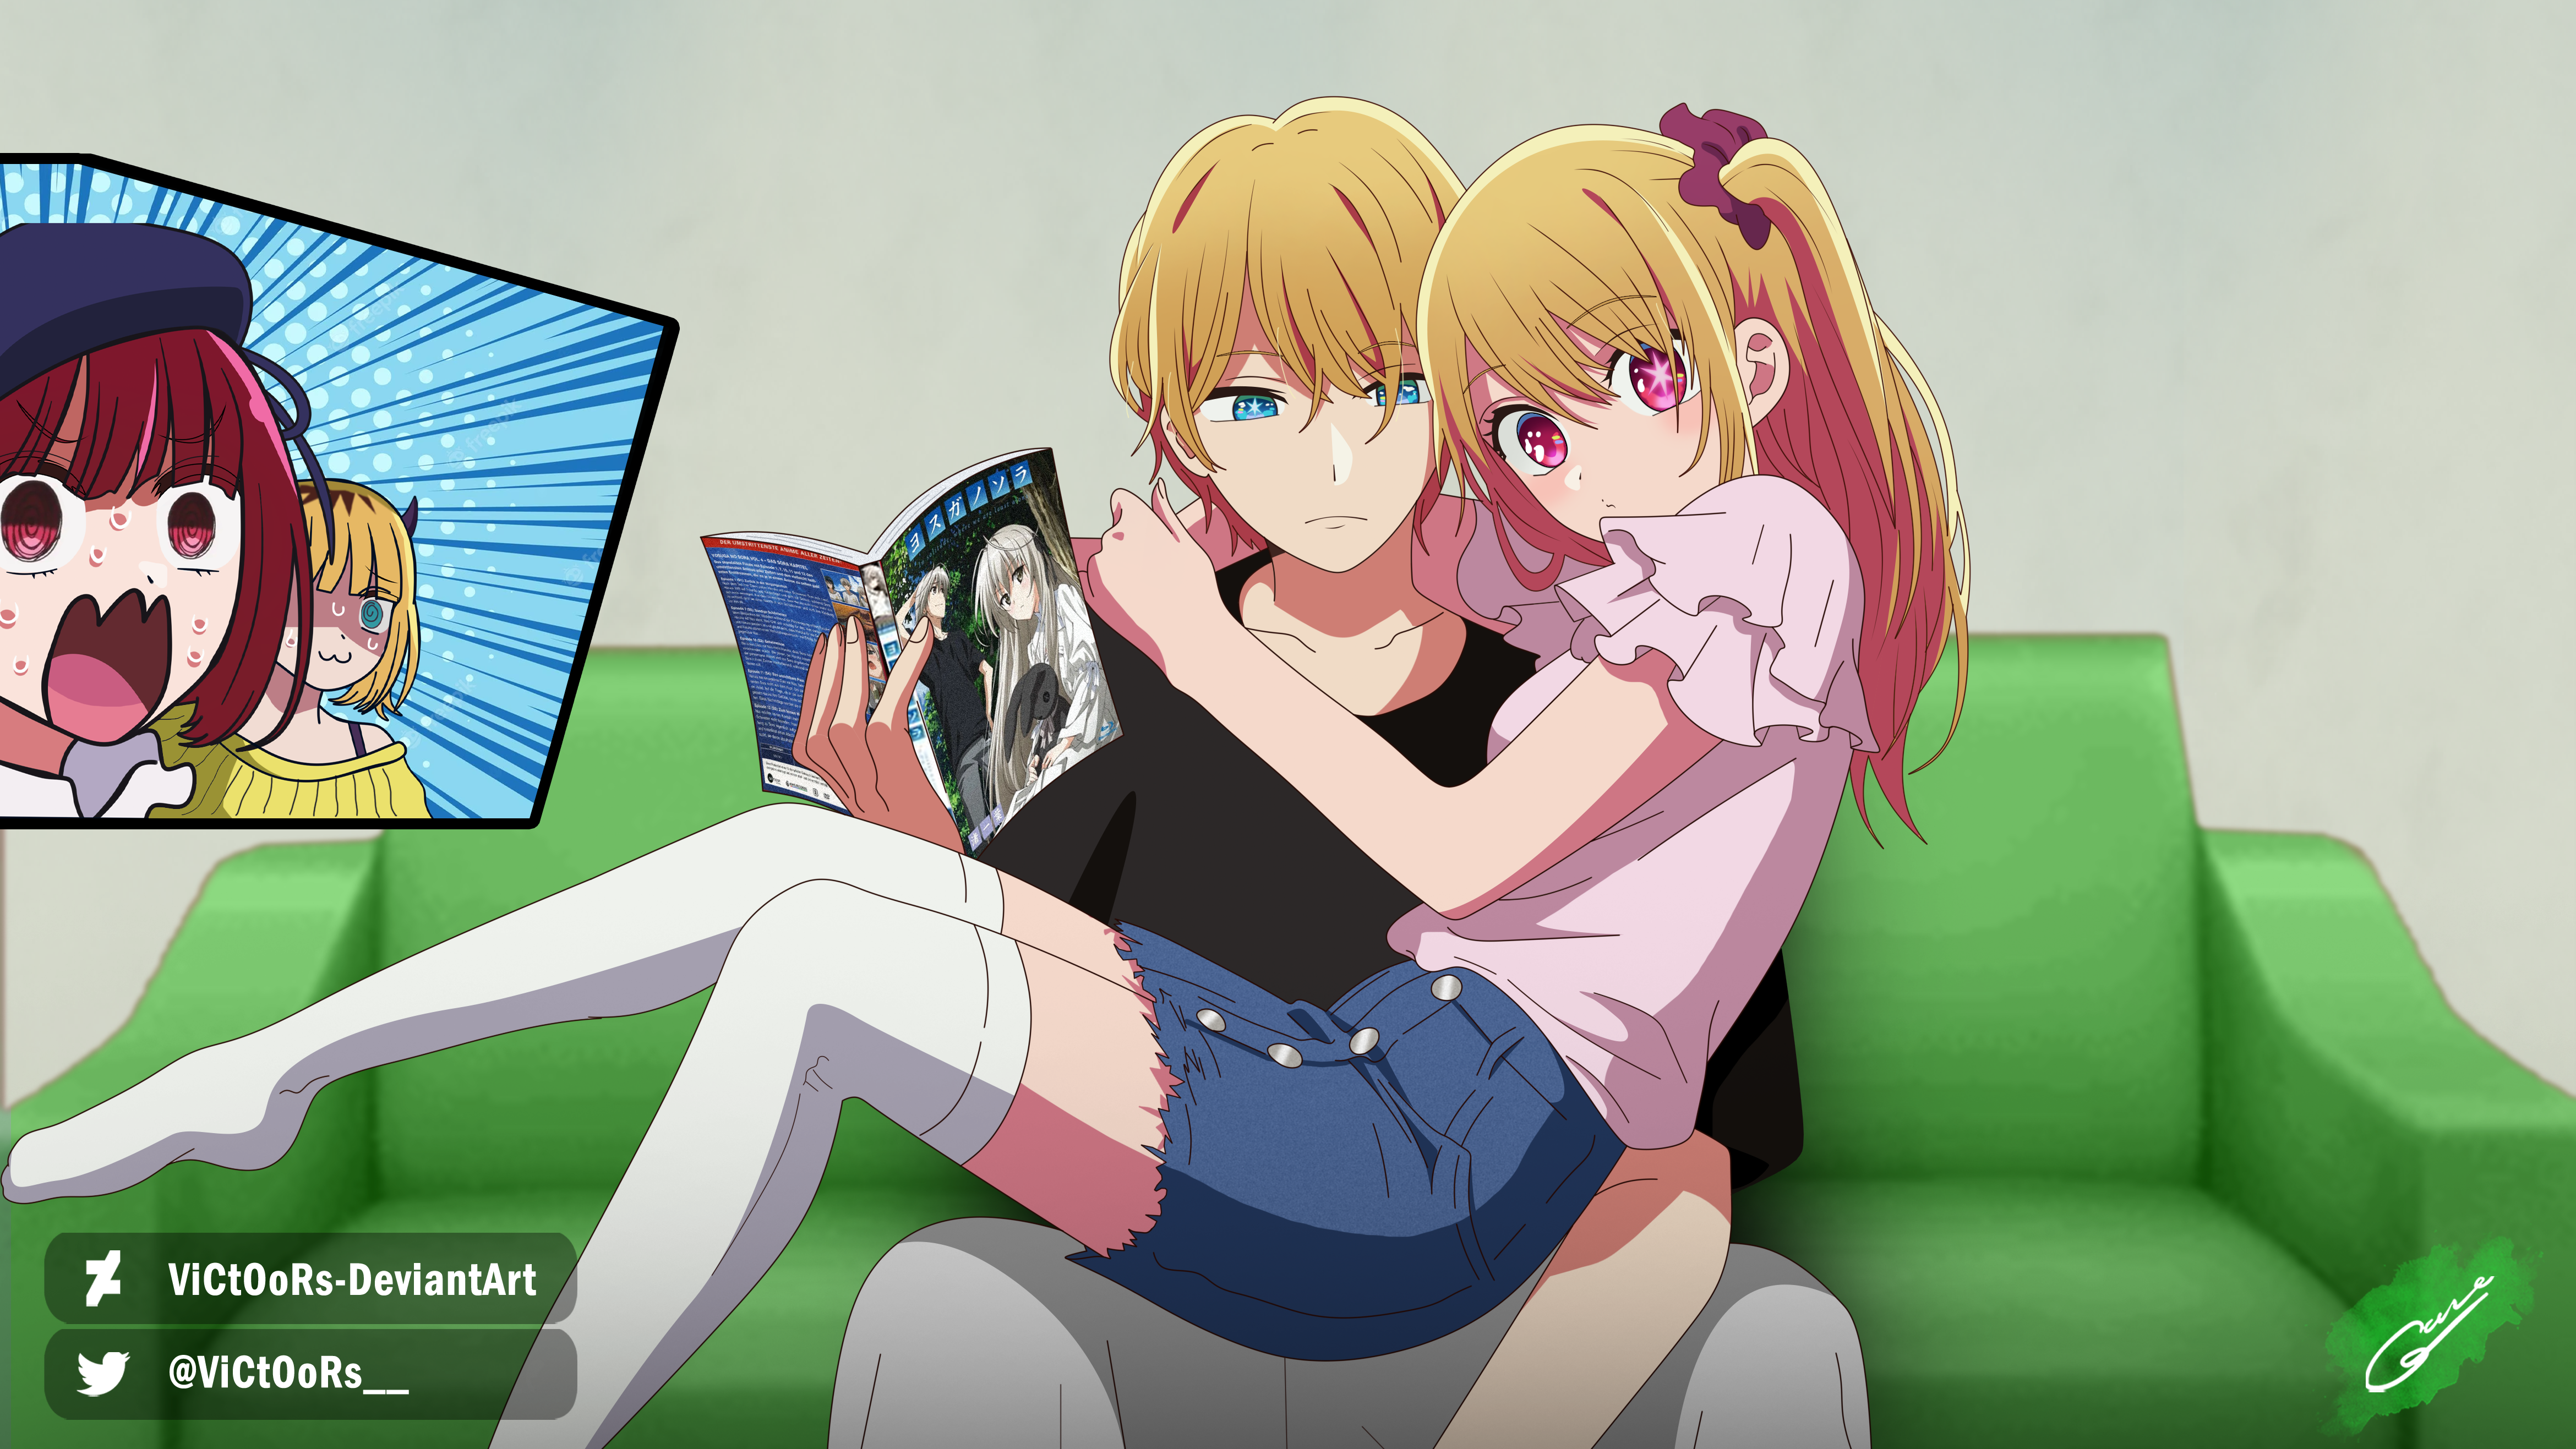 FanArt Anime & Manga added a new - FanArt Anime & Manga